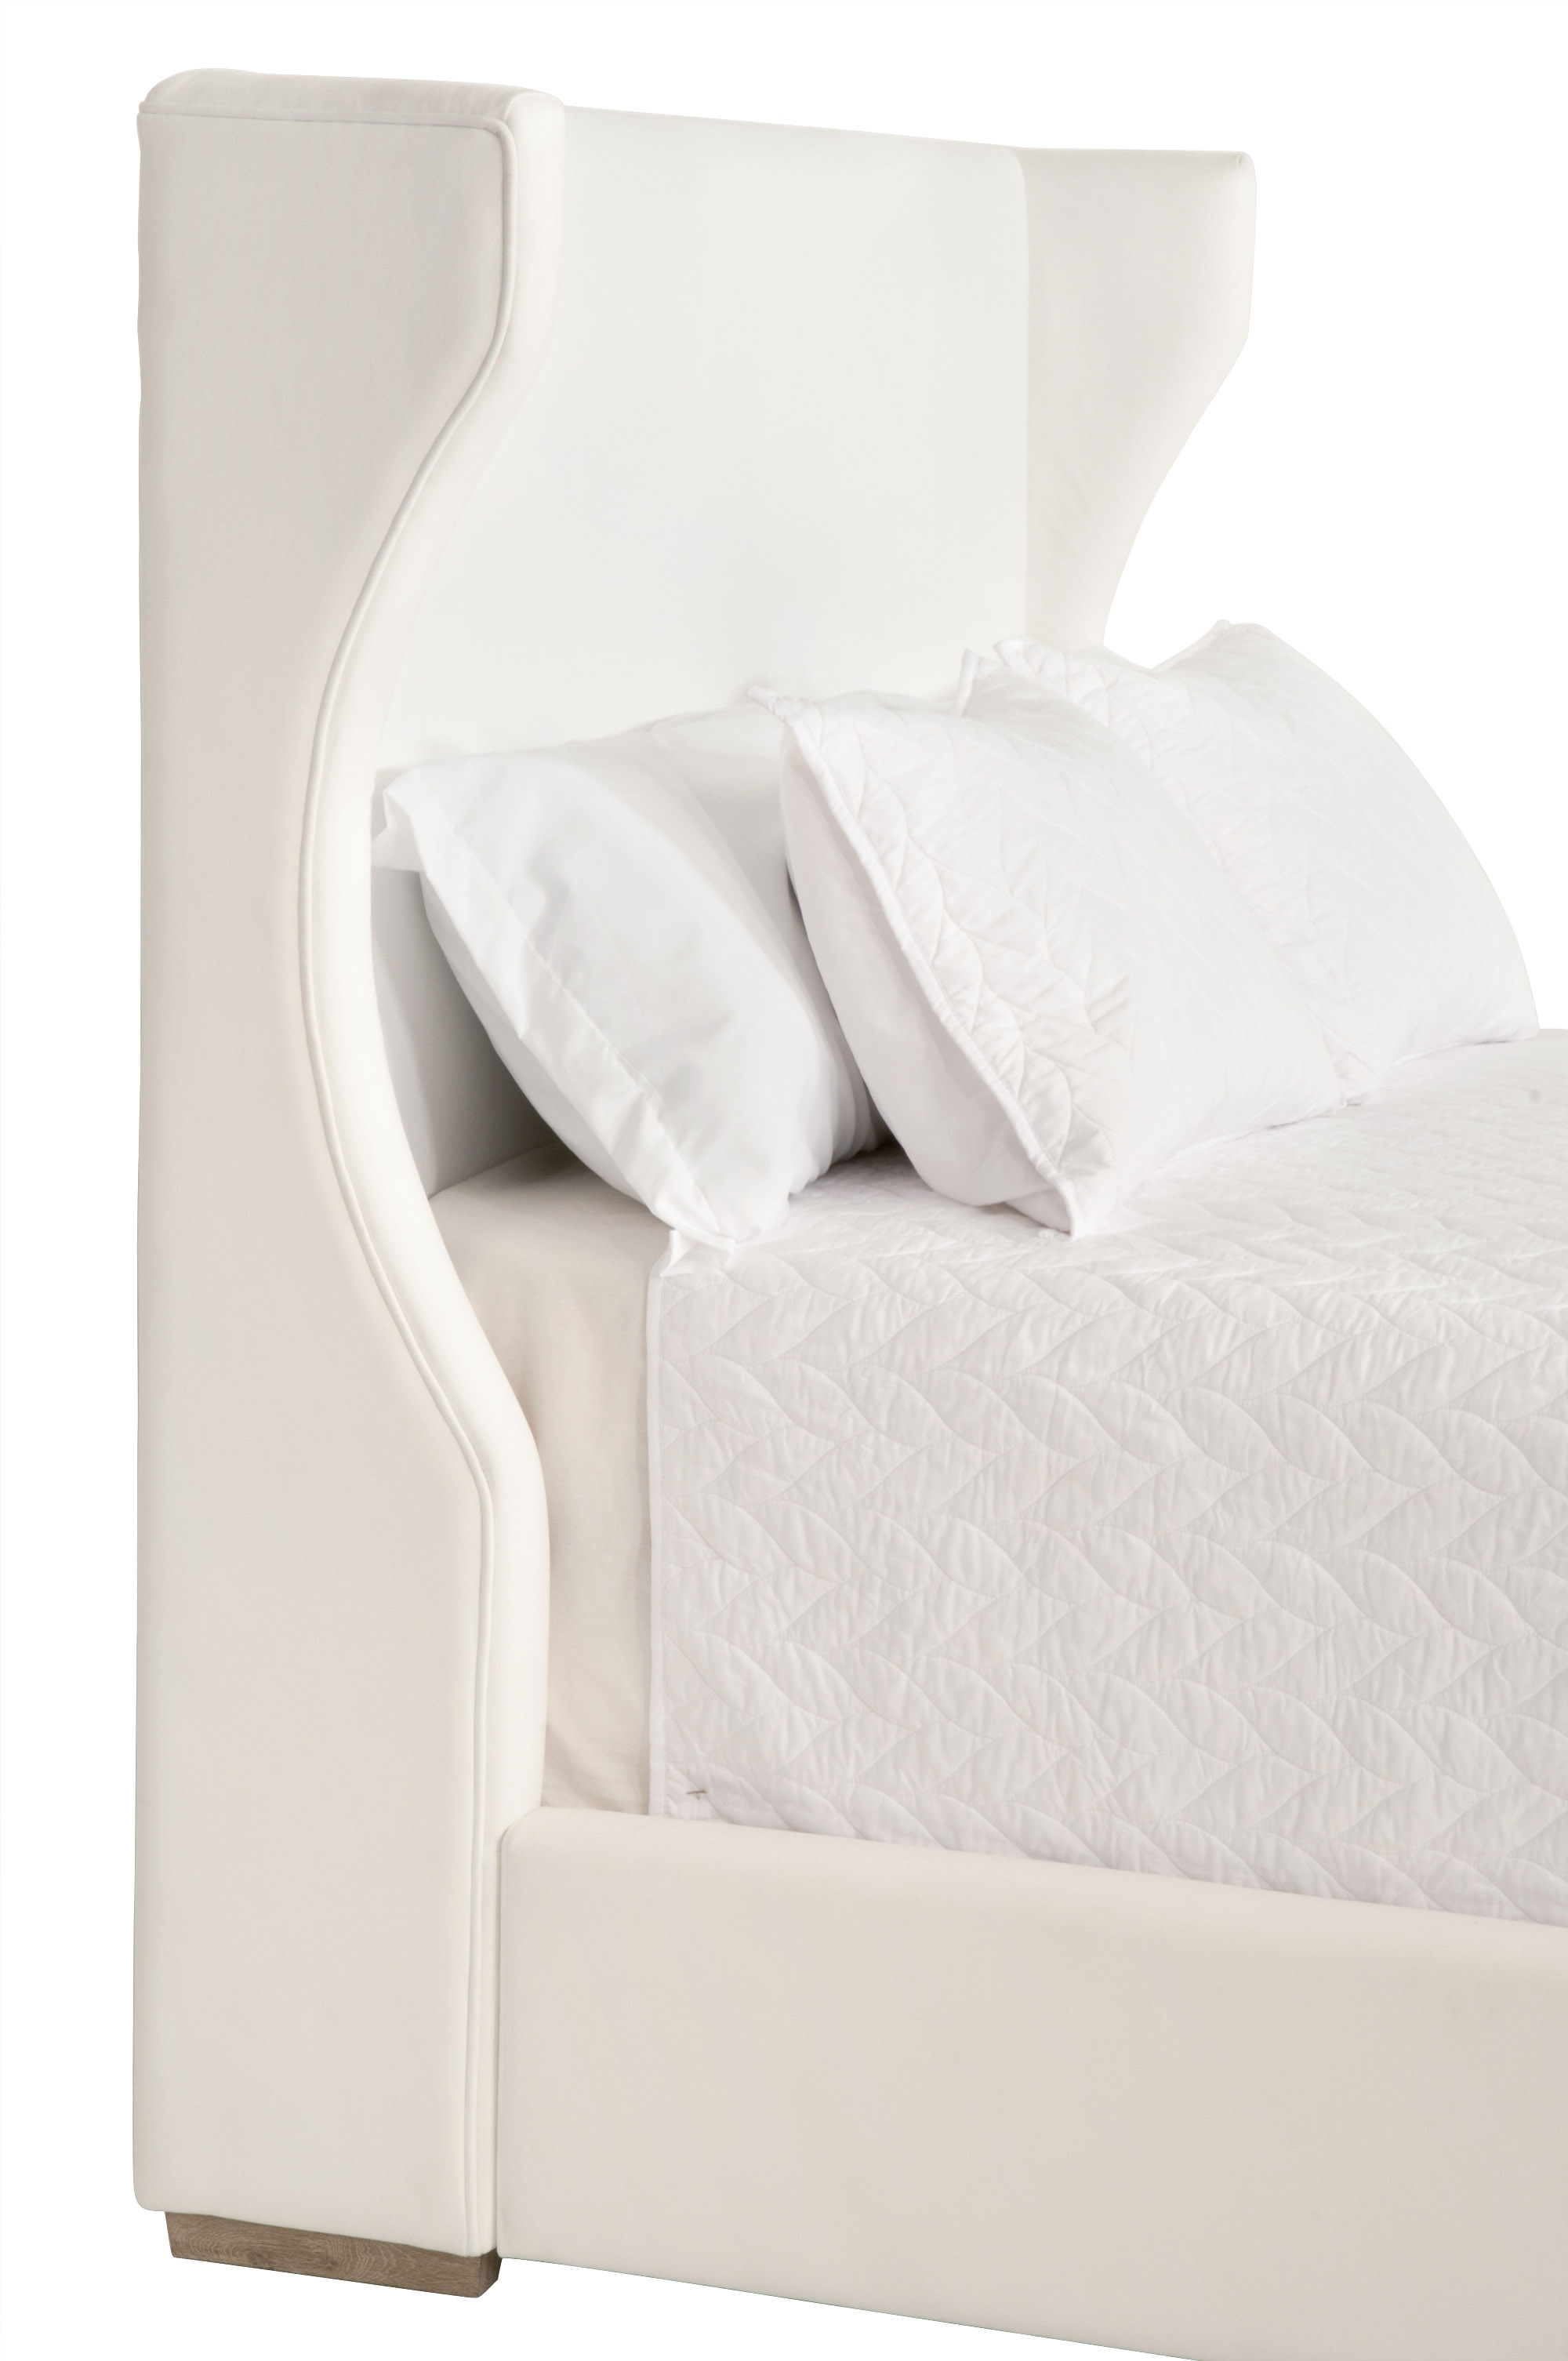 Balboa Standard King Bed - Image 6